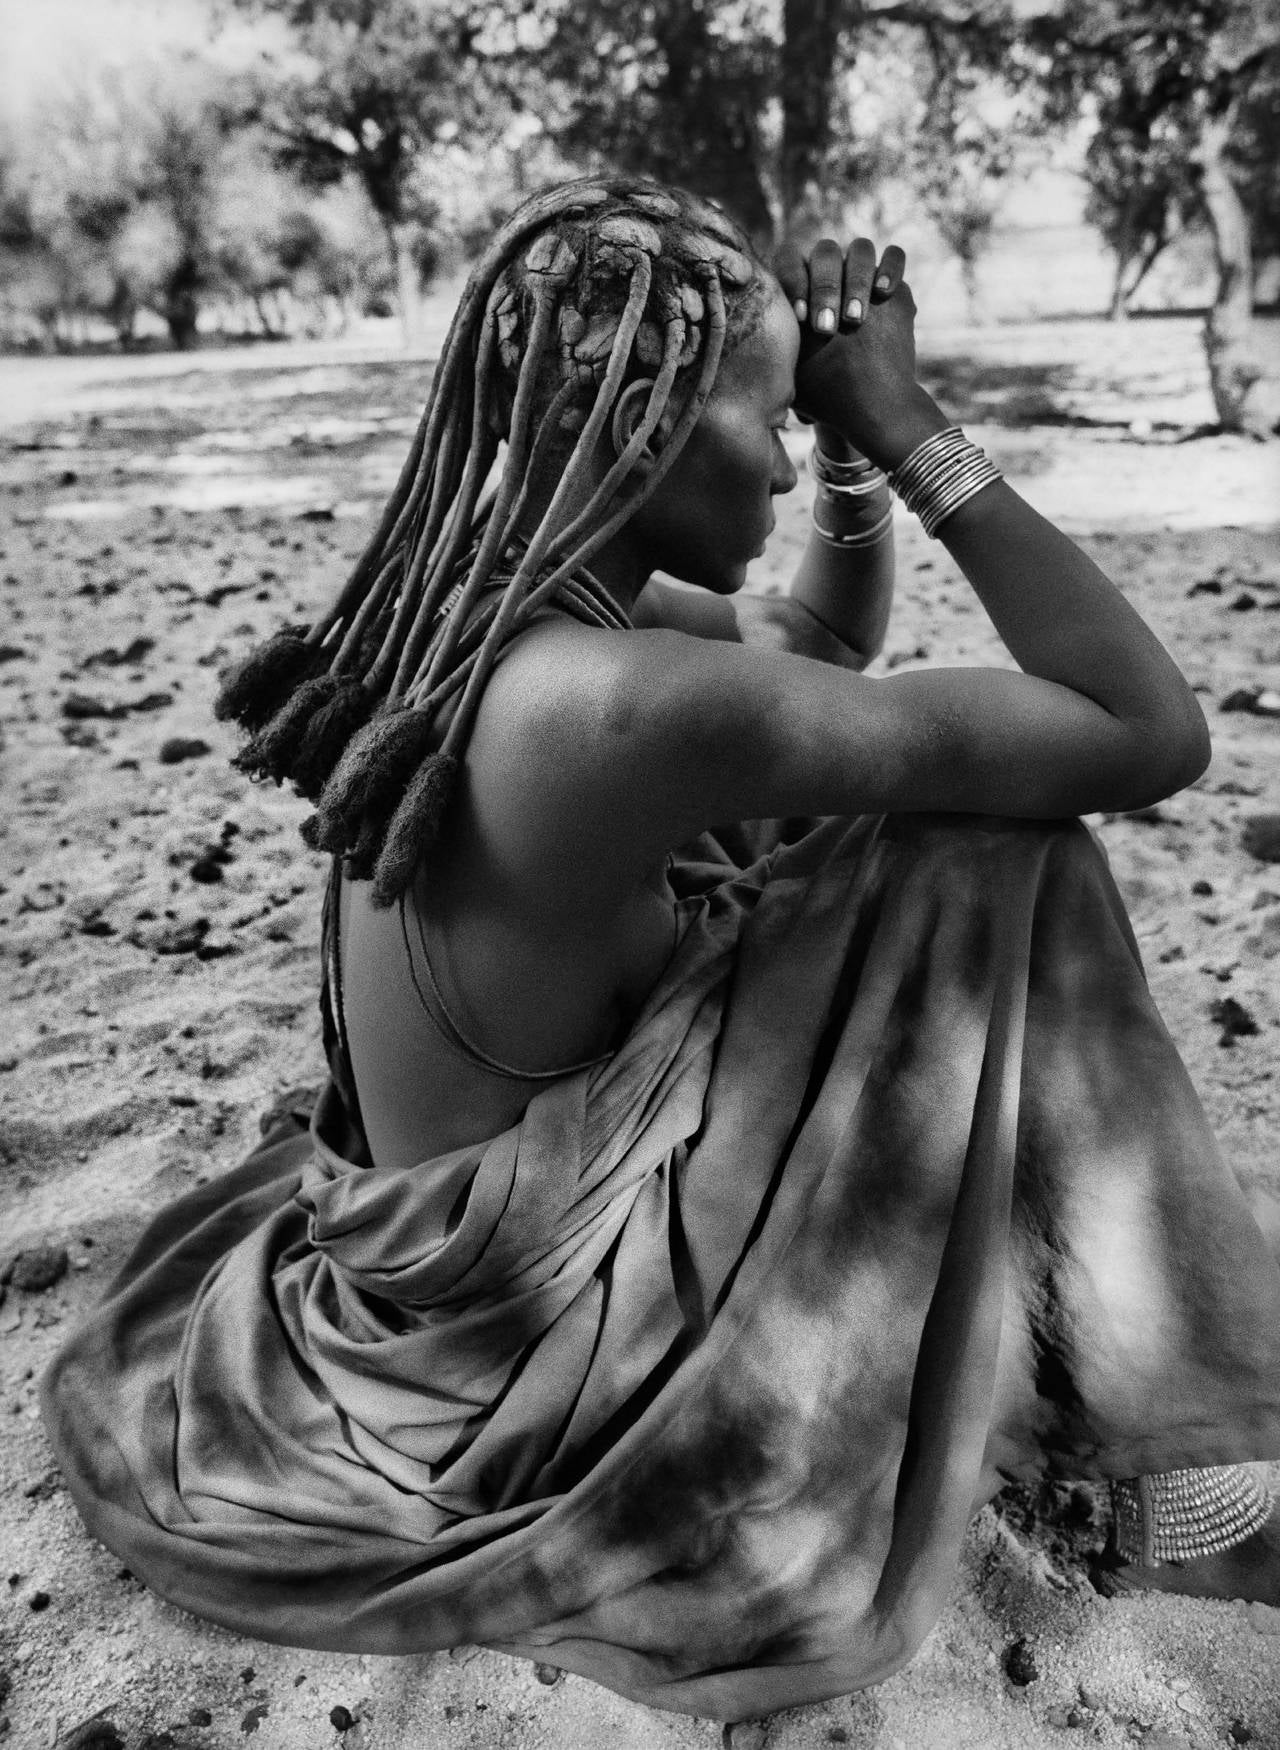 Eine Himba-Frau, Kaokoland, Namibia, 2005
Sebastião Salgado
Gestempelt mit dem Copyright-Blindstempel des Fotografen
Signiert, rückseitig beschriftet
Silber-Gelatine-Druck
16 x 20 Zoll

Sebastião Salgado (geb. 1944) ist einer der berühmtesten